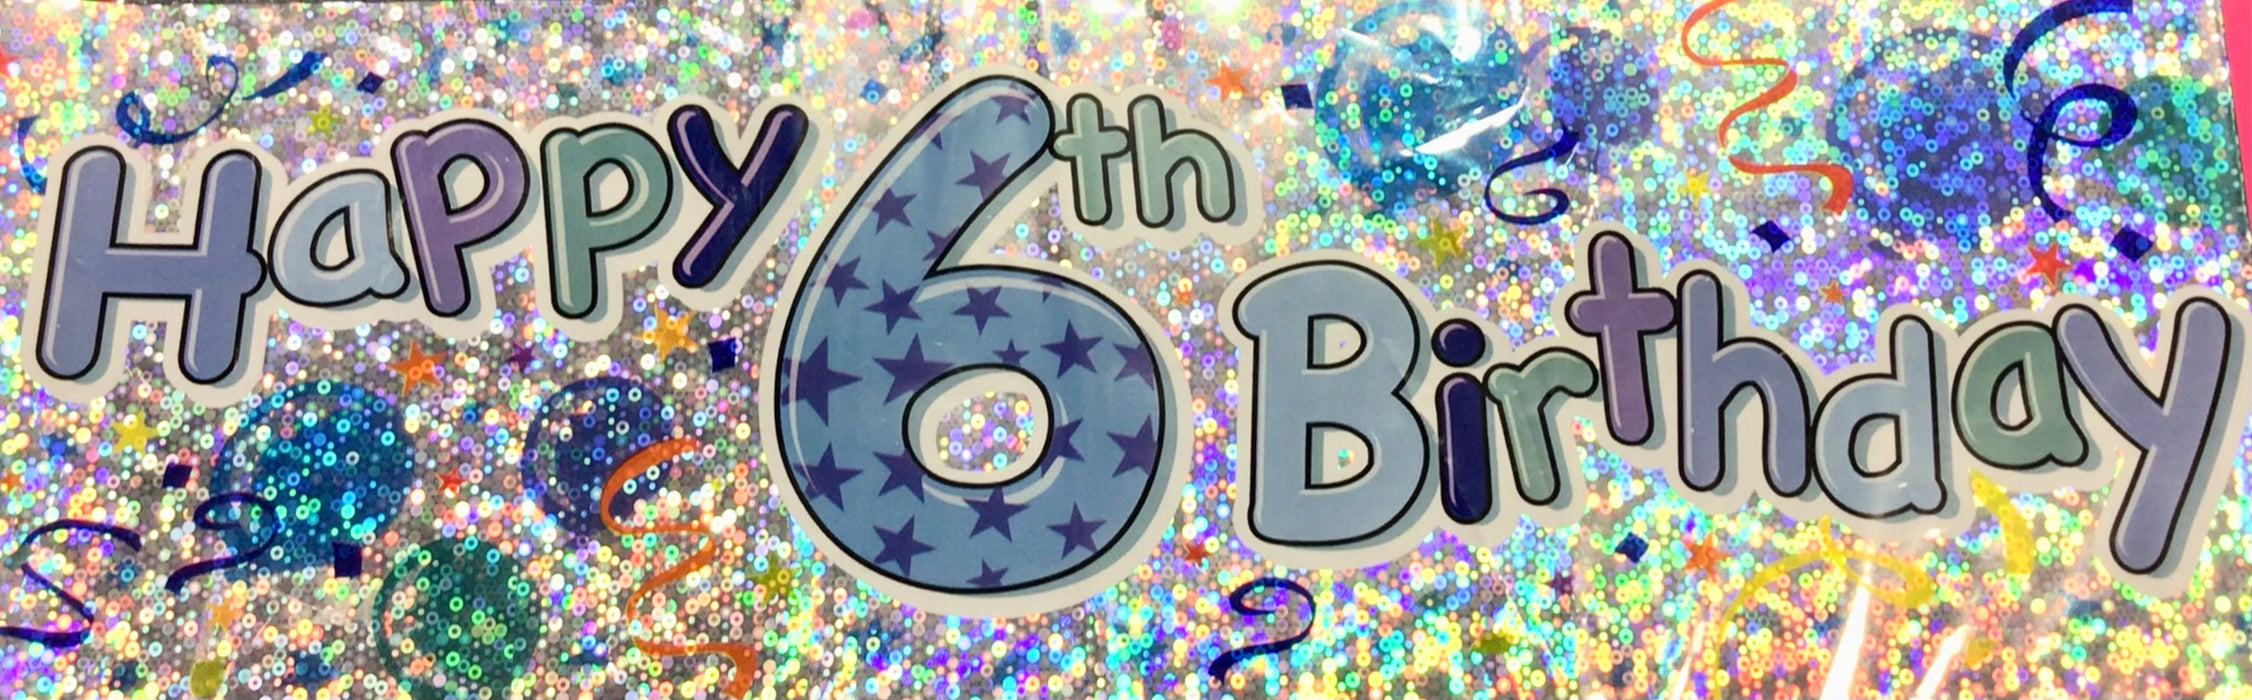 Age 6 Birthday Banner